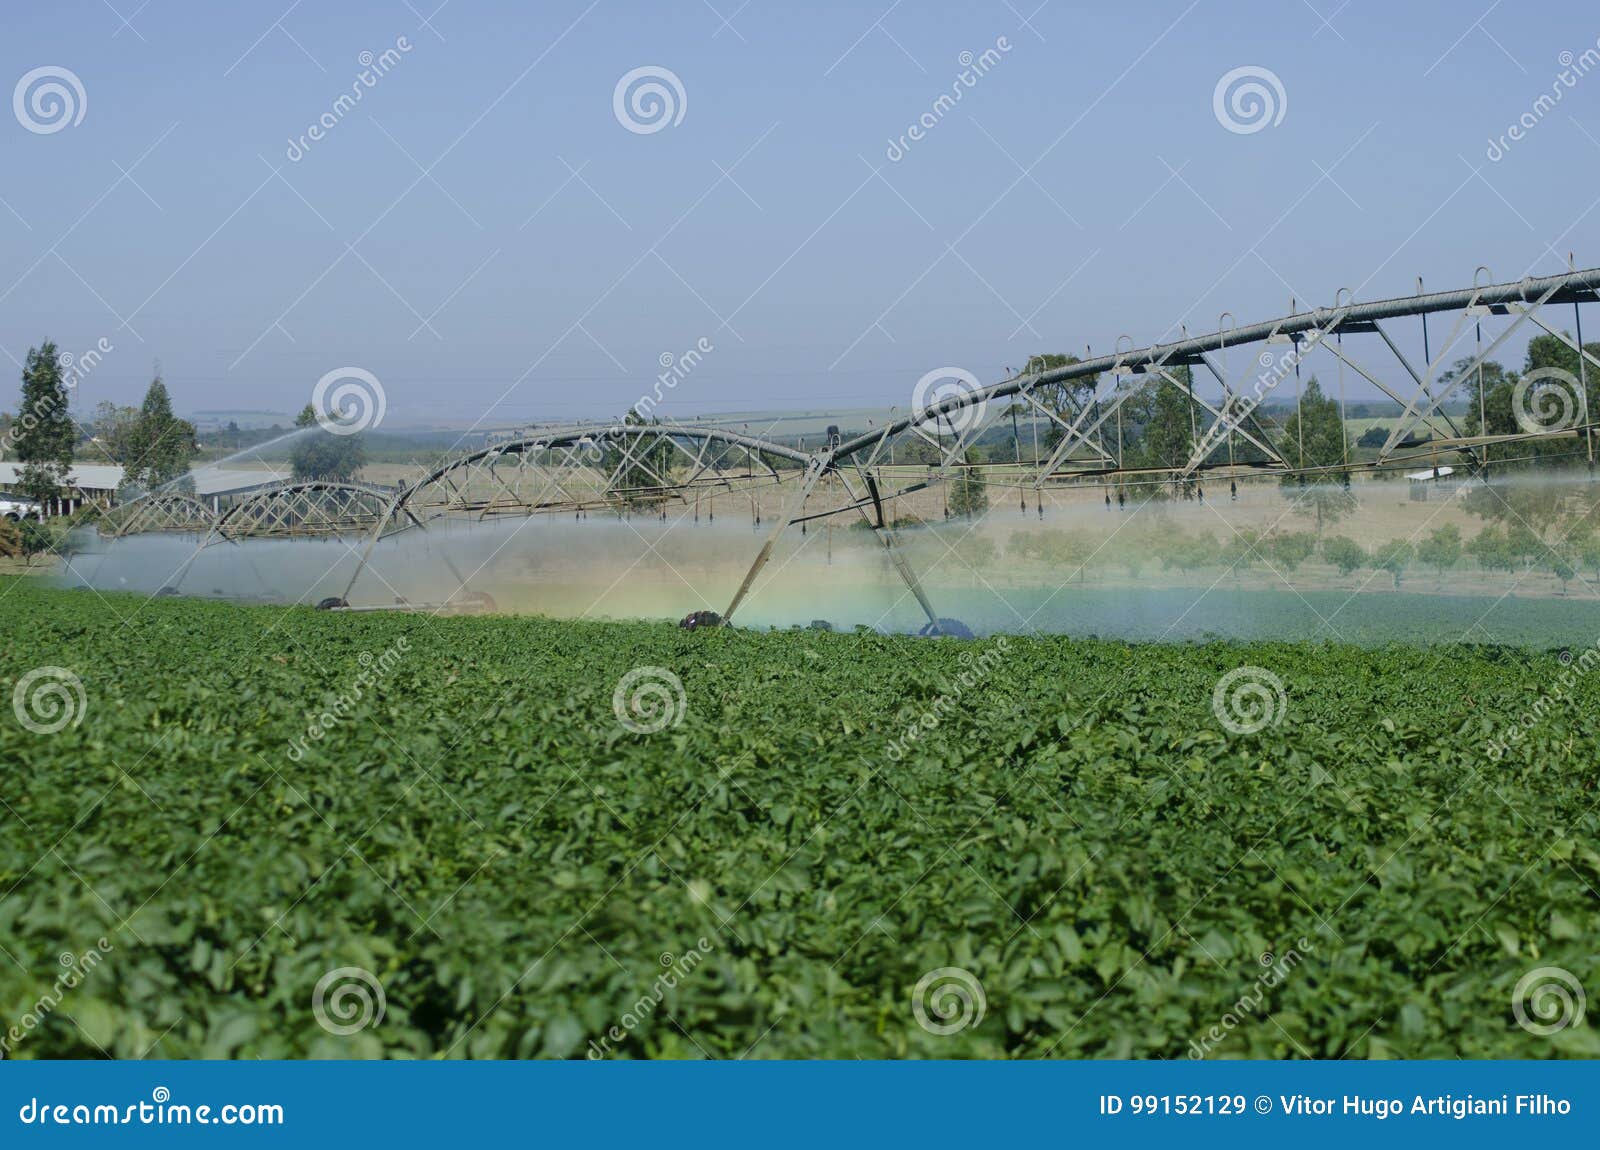 potato production on irrigation by pivot center